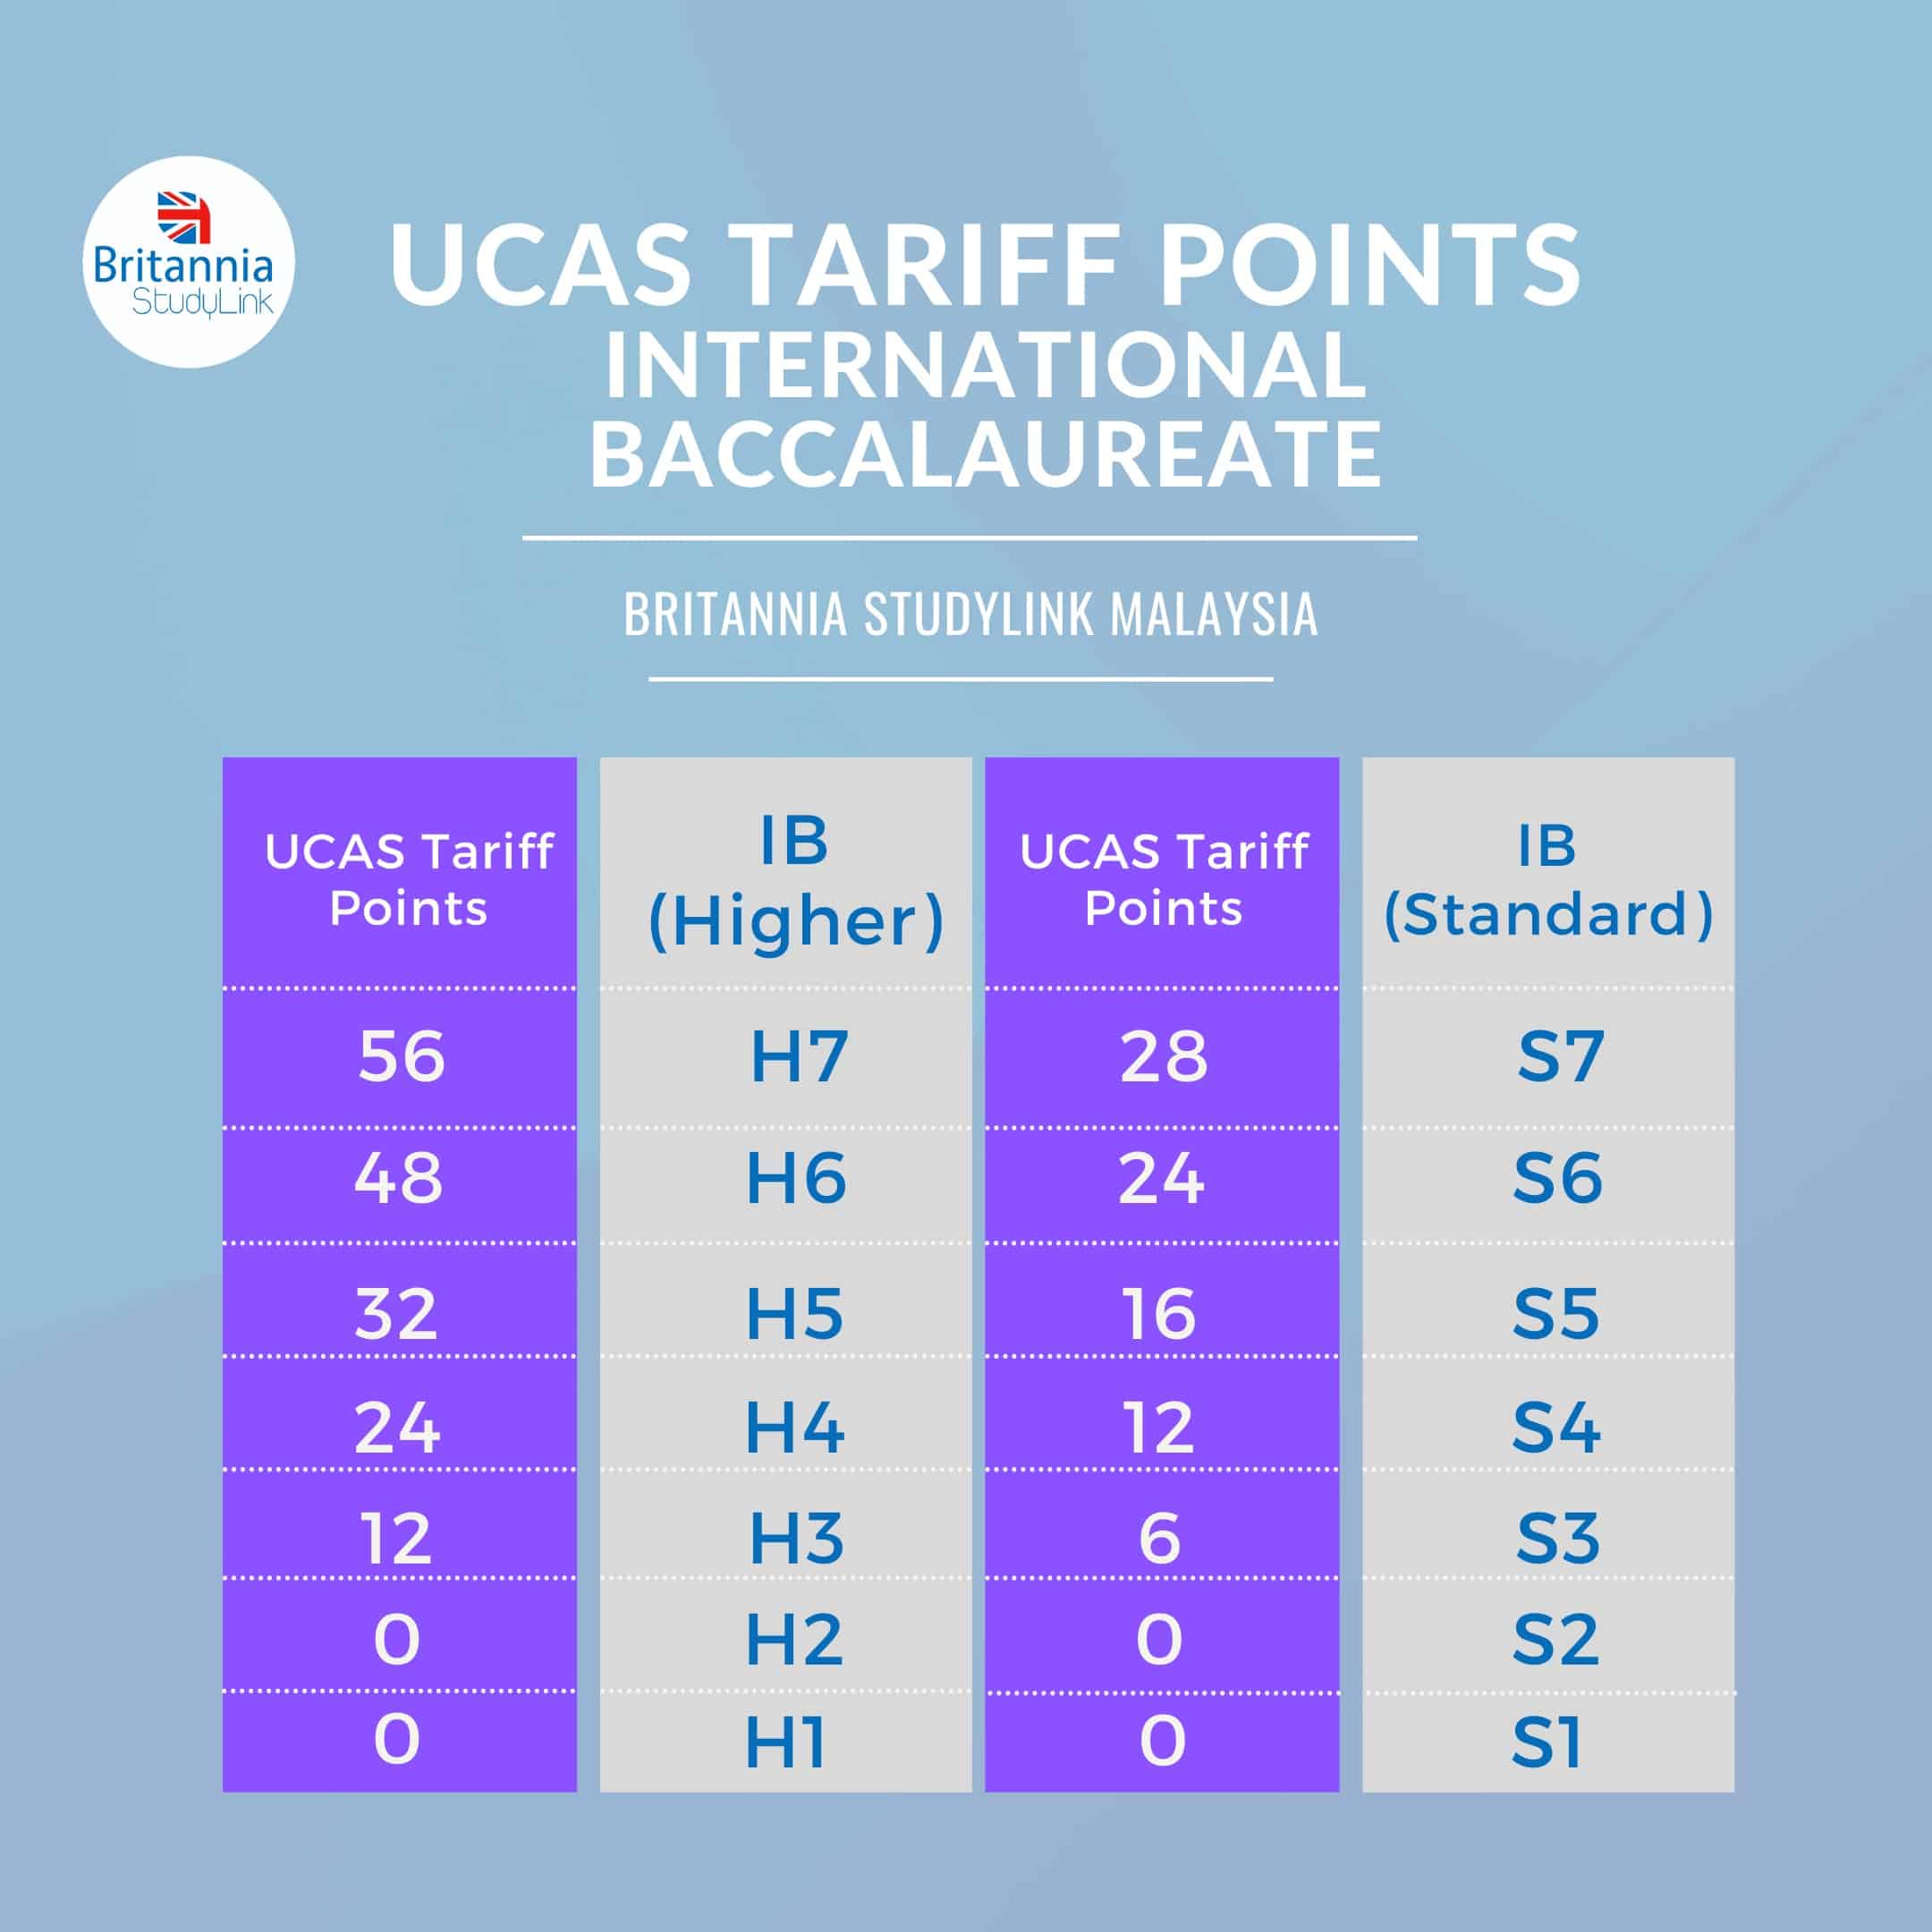 ucas-tariff-points-ib-britannia-studylink-malaysia-uk-study-expert